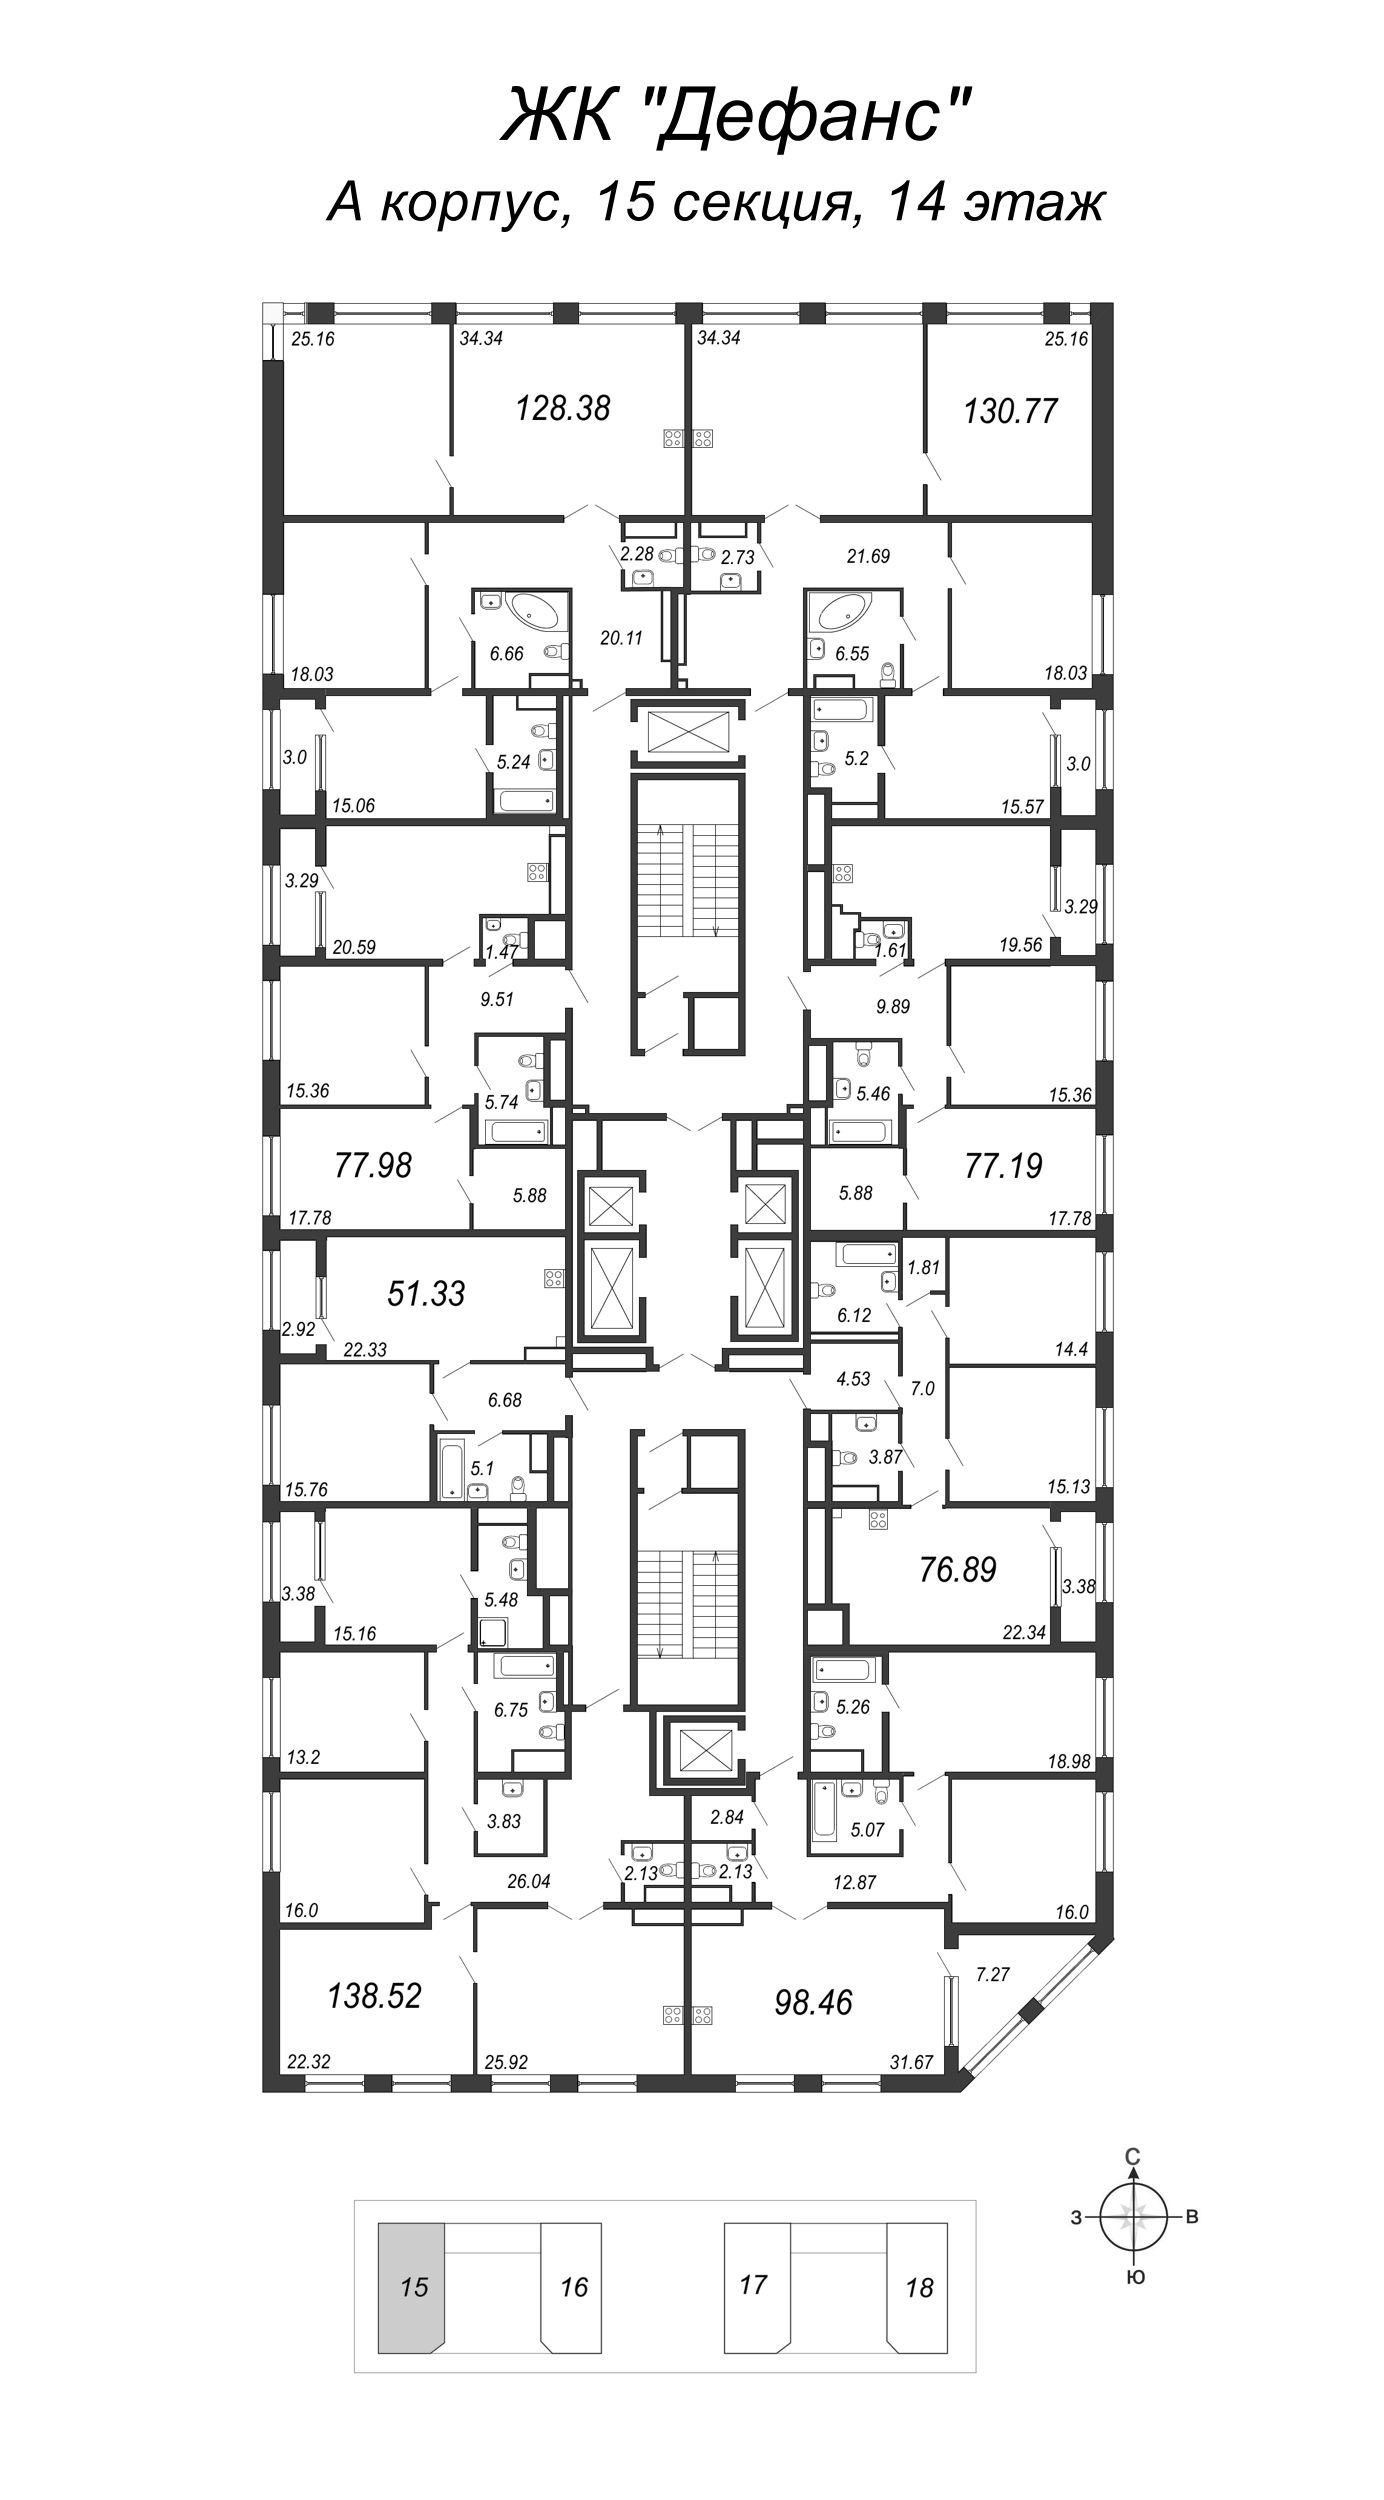 3-комнатная (Евро) квартира, 76.89 м² - планировка этажа